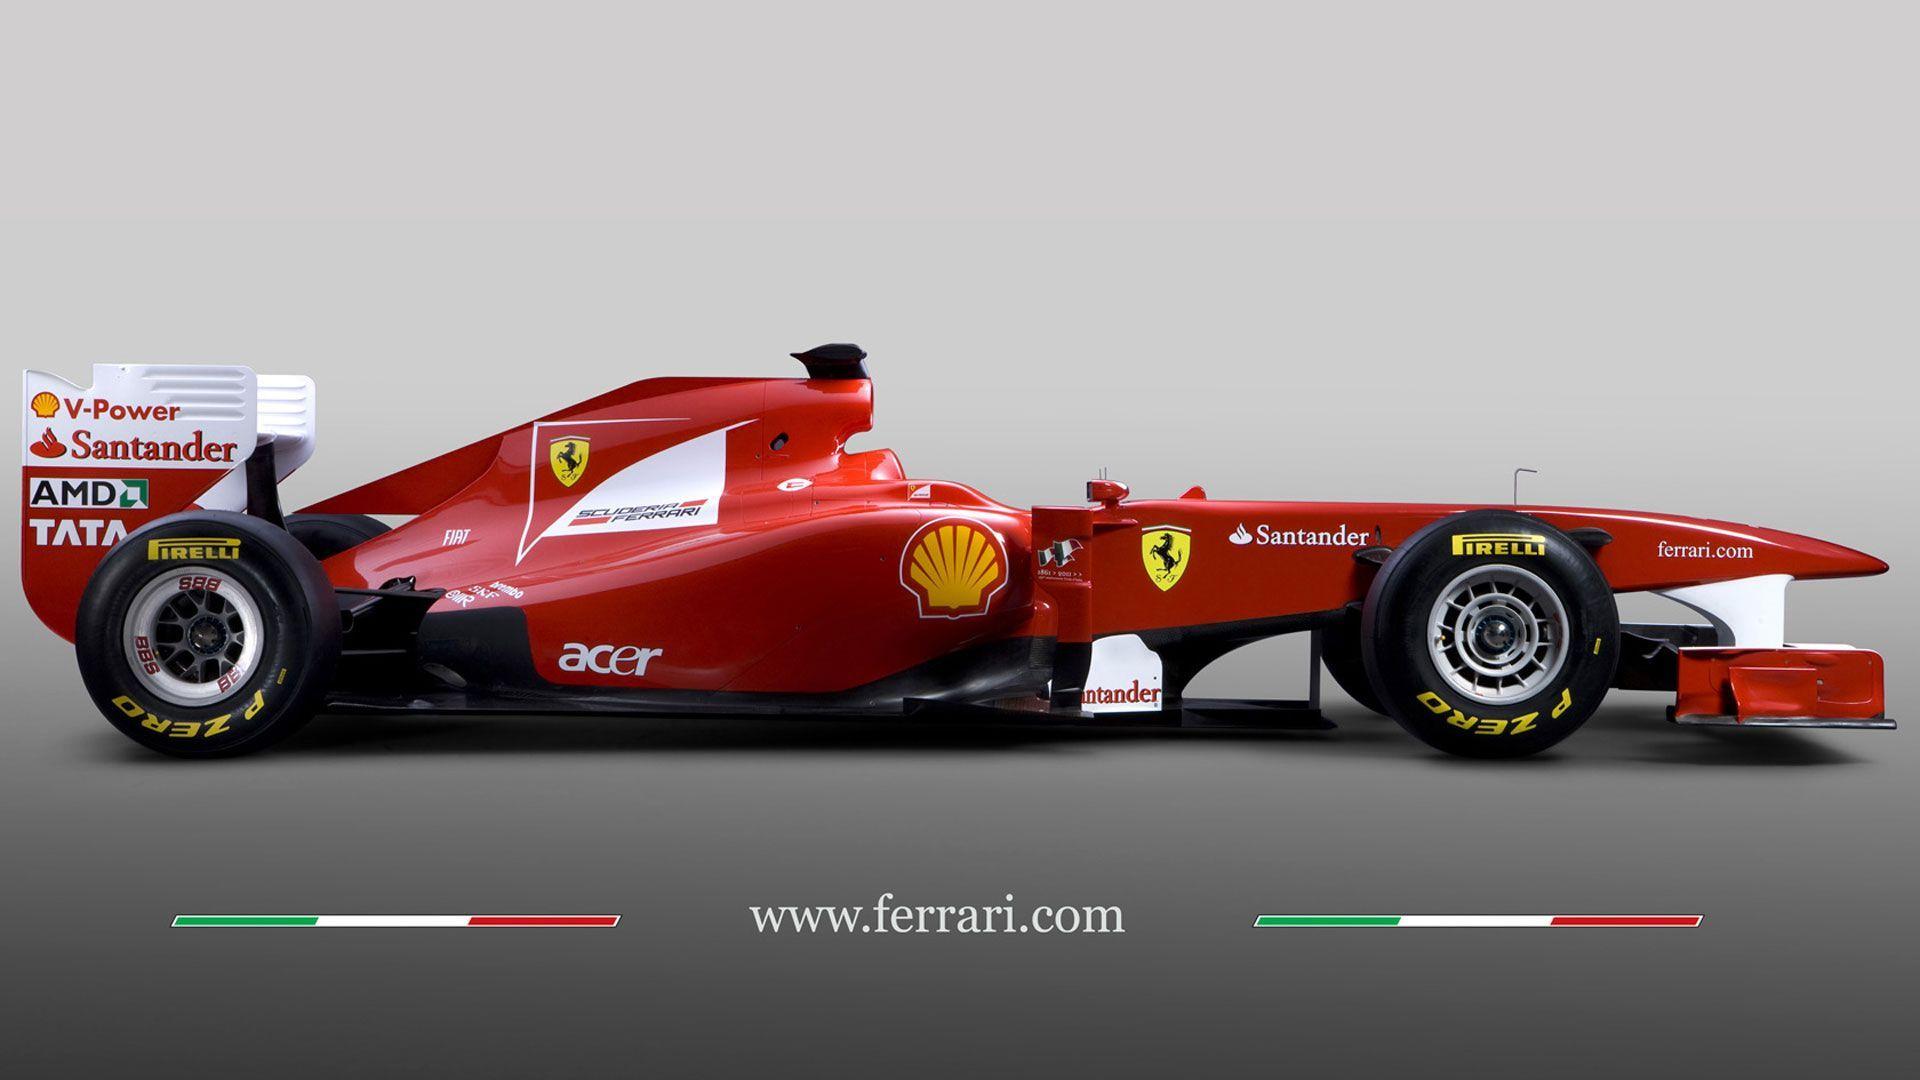 F1 Wallpaper Phone #hjm. Cars. Ferrari, Ferrari f Cars